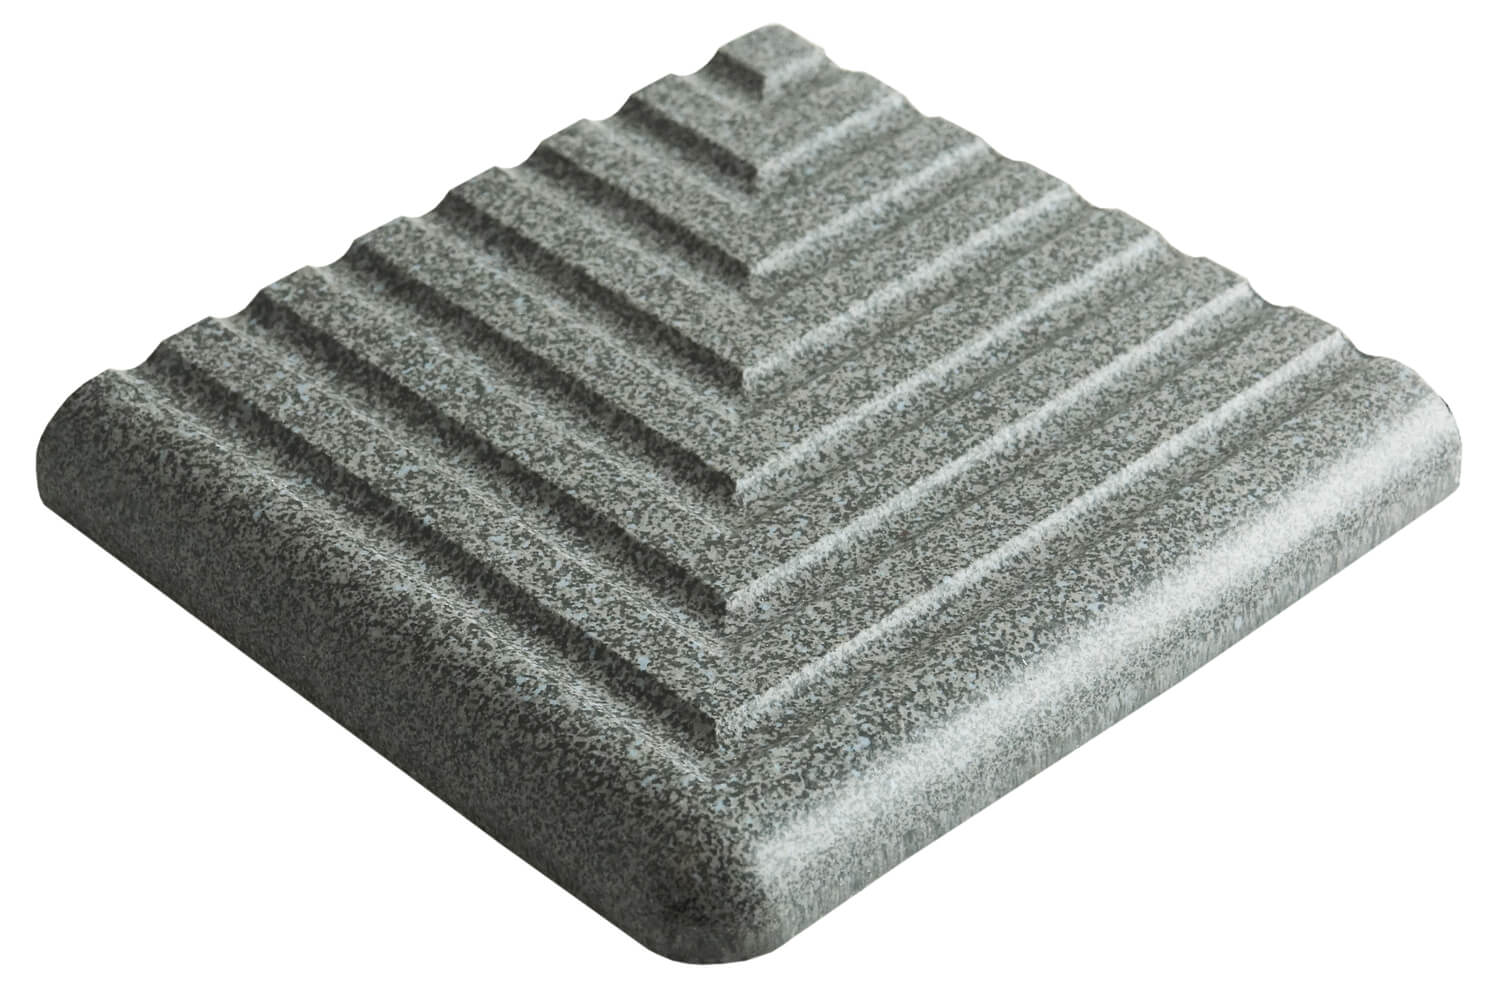 Dorset Woolliscroft Dark Grey Step Tread Slip Resistant Quarry Tile 100x100mm